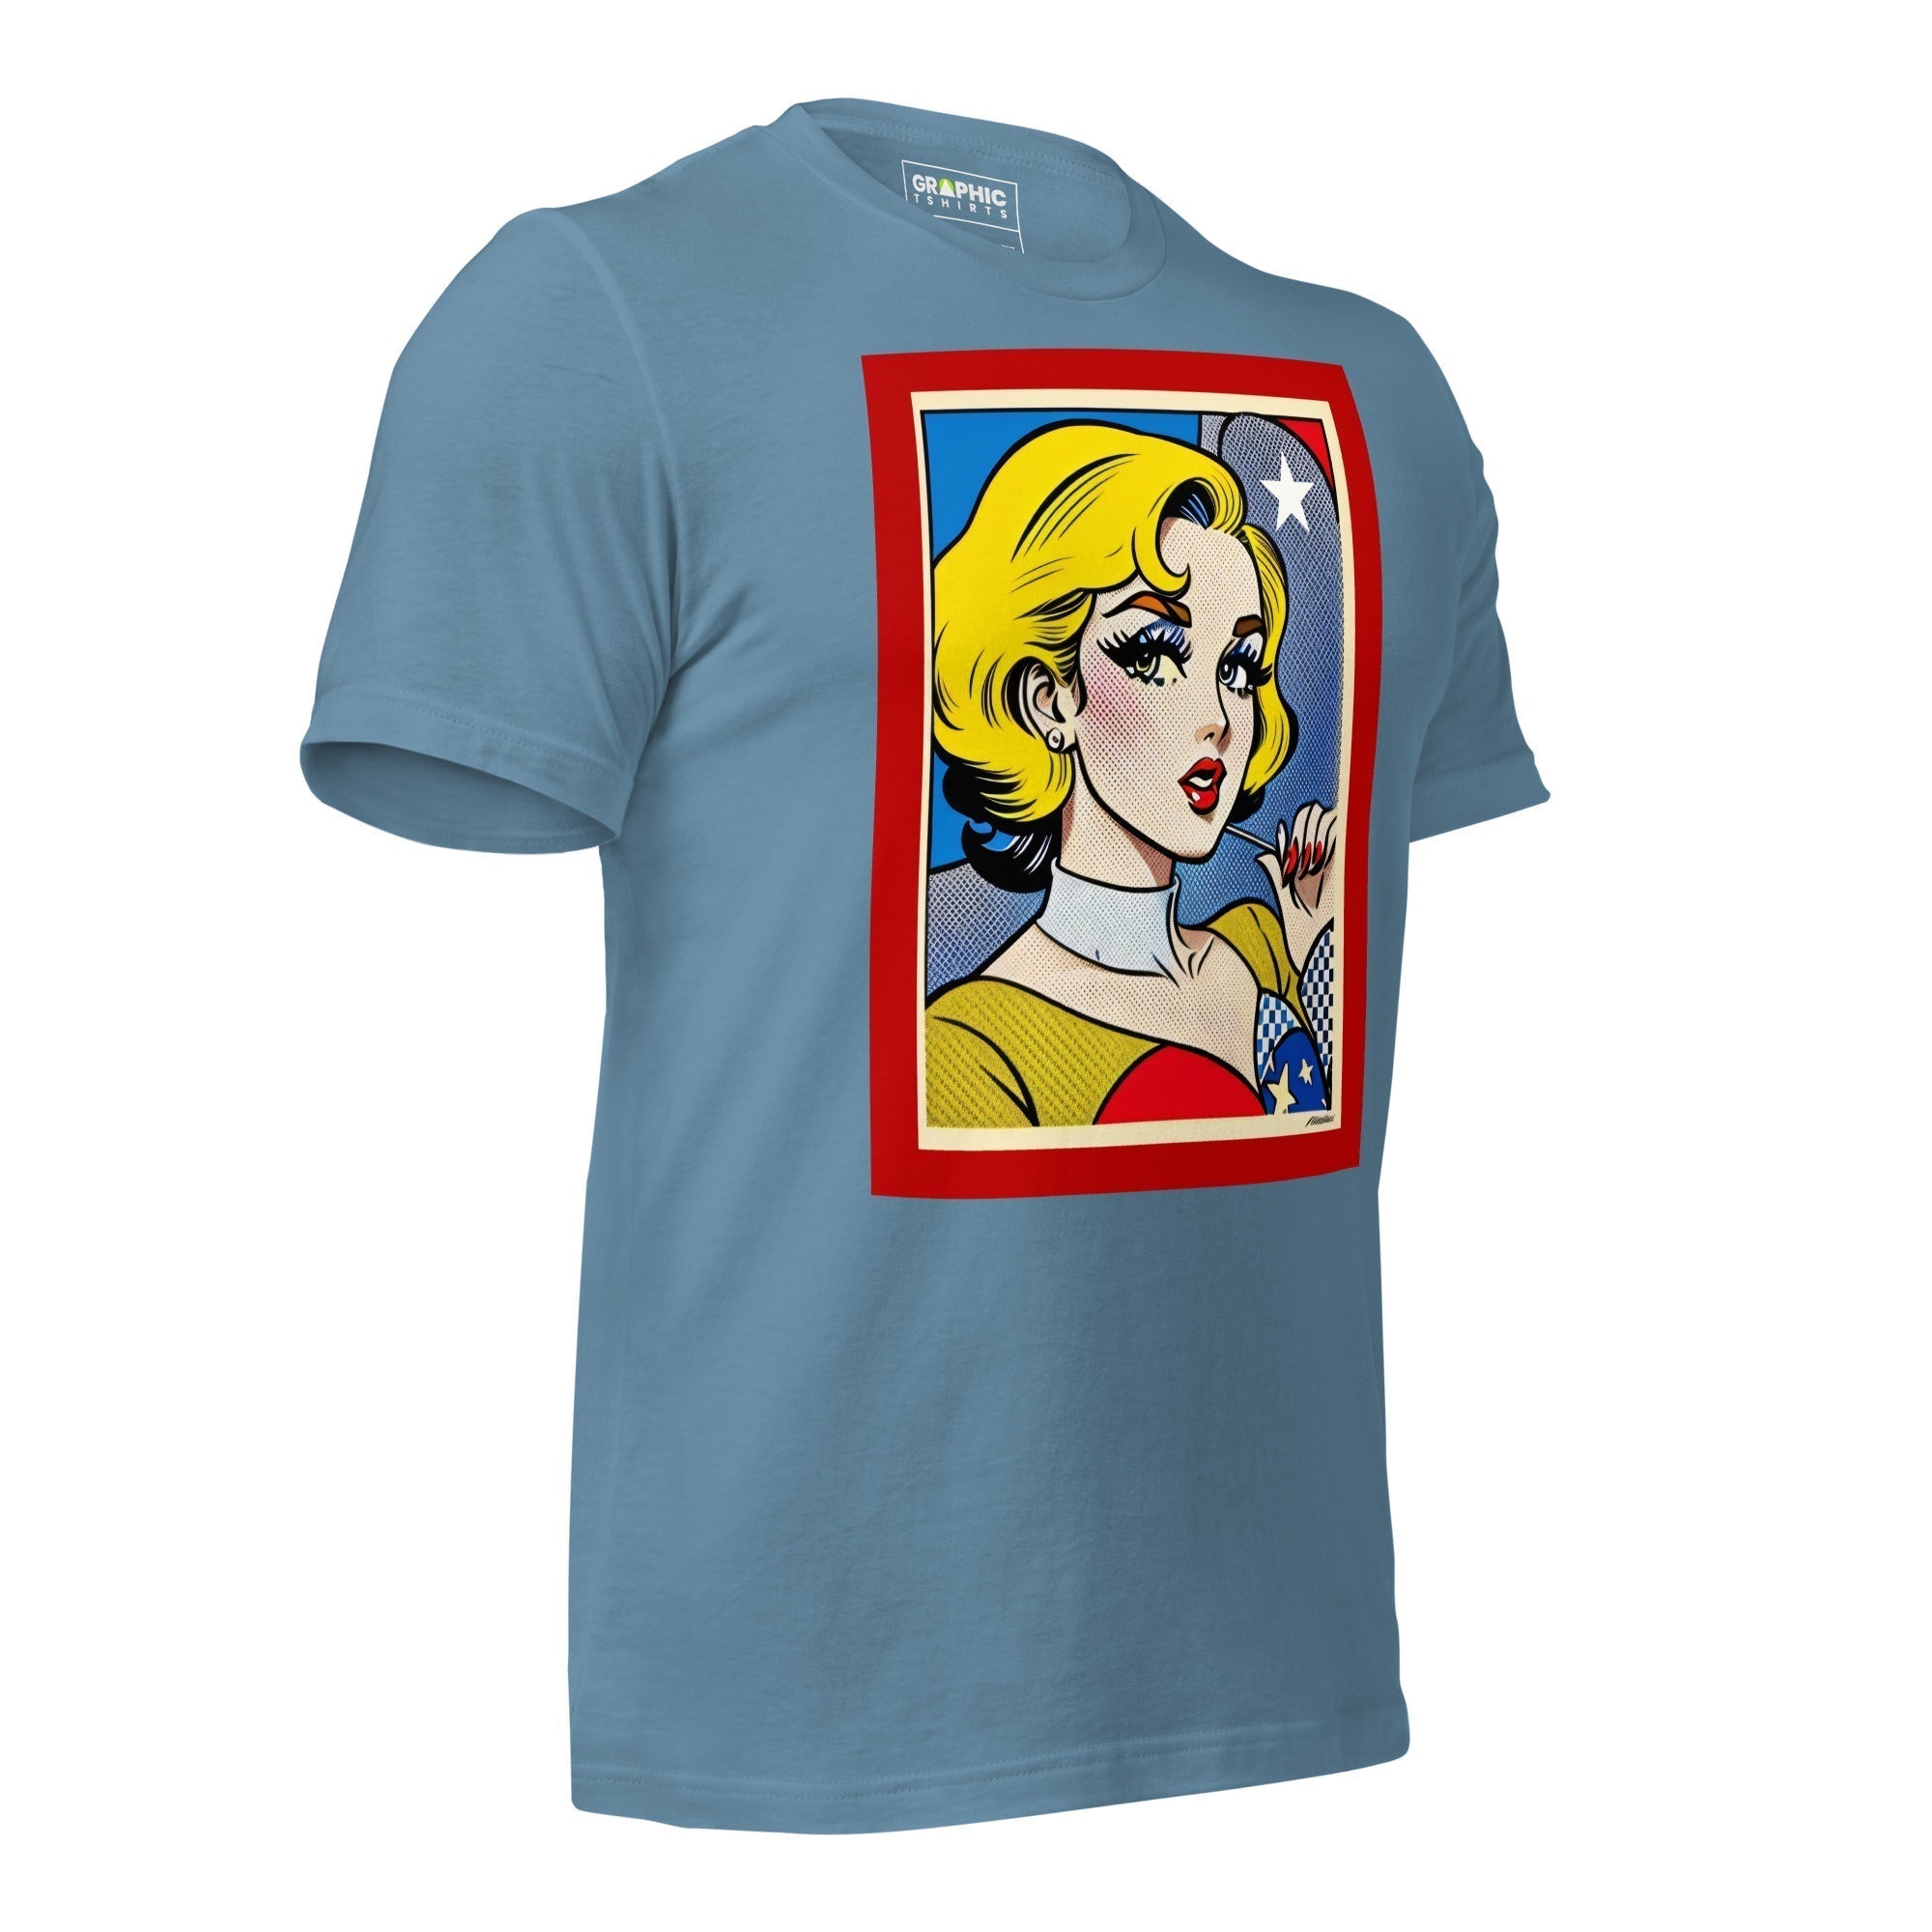 Unisex Crew Neck T-Shirt - Vintage American Comic Series v.21 - GRAPHIC T-SHIRTS